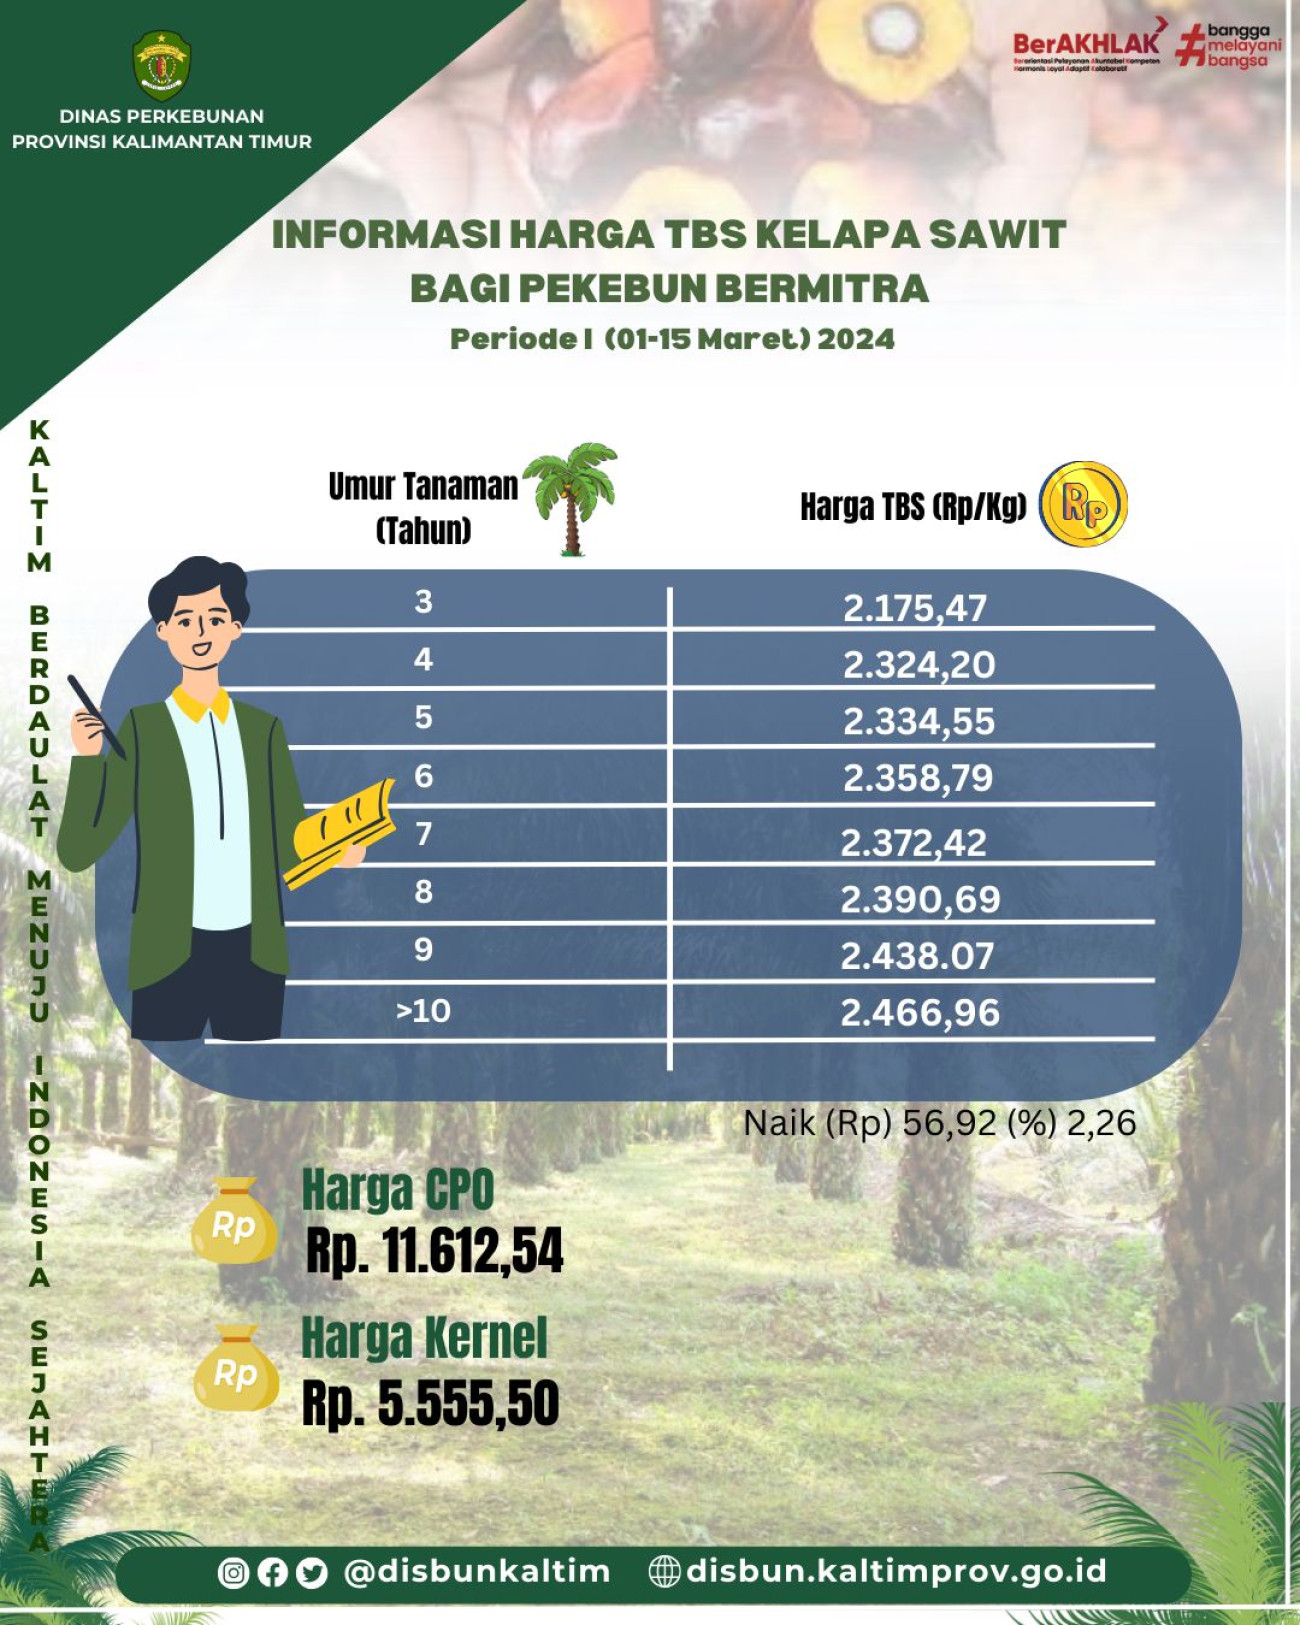 Informasi Harga TBS Kelapa Sawit bagi Pekebun Mitra Periode I Bulan Maret 2024